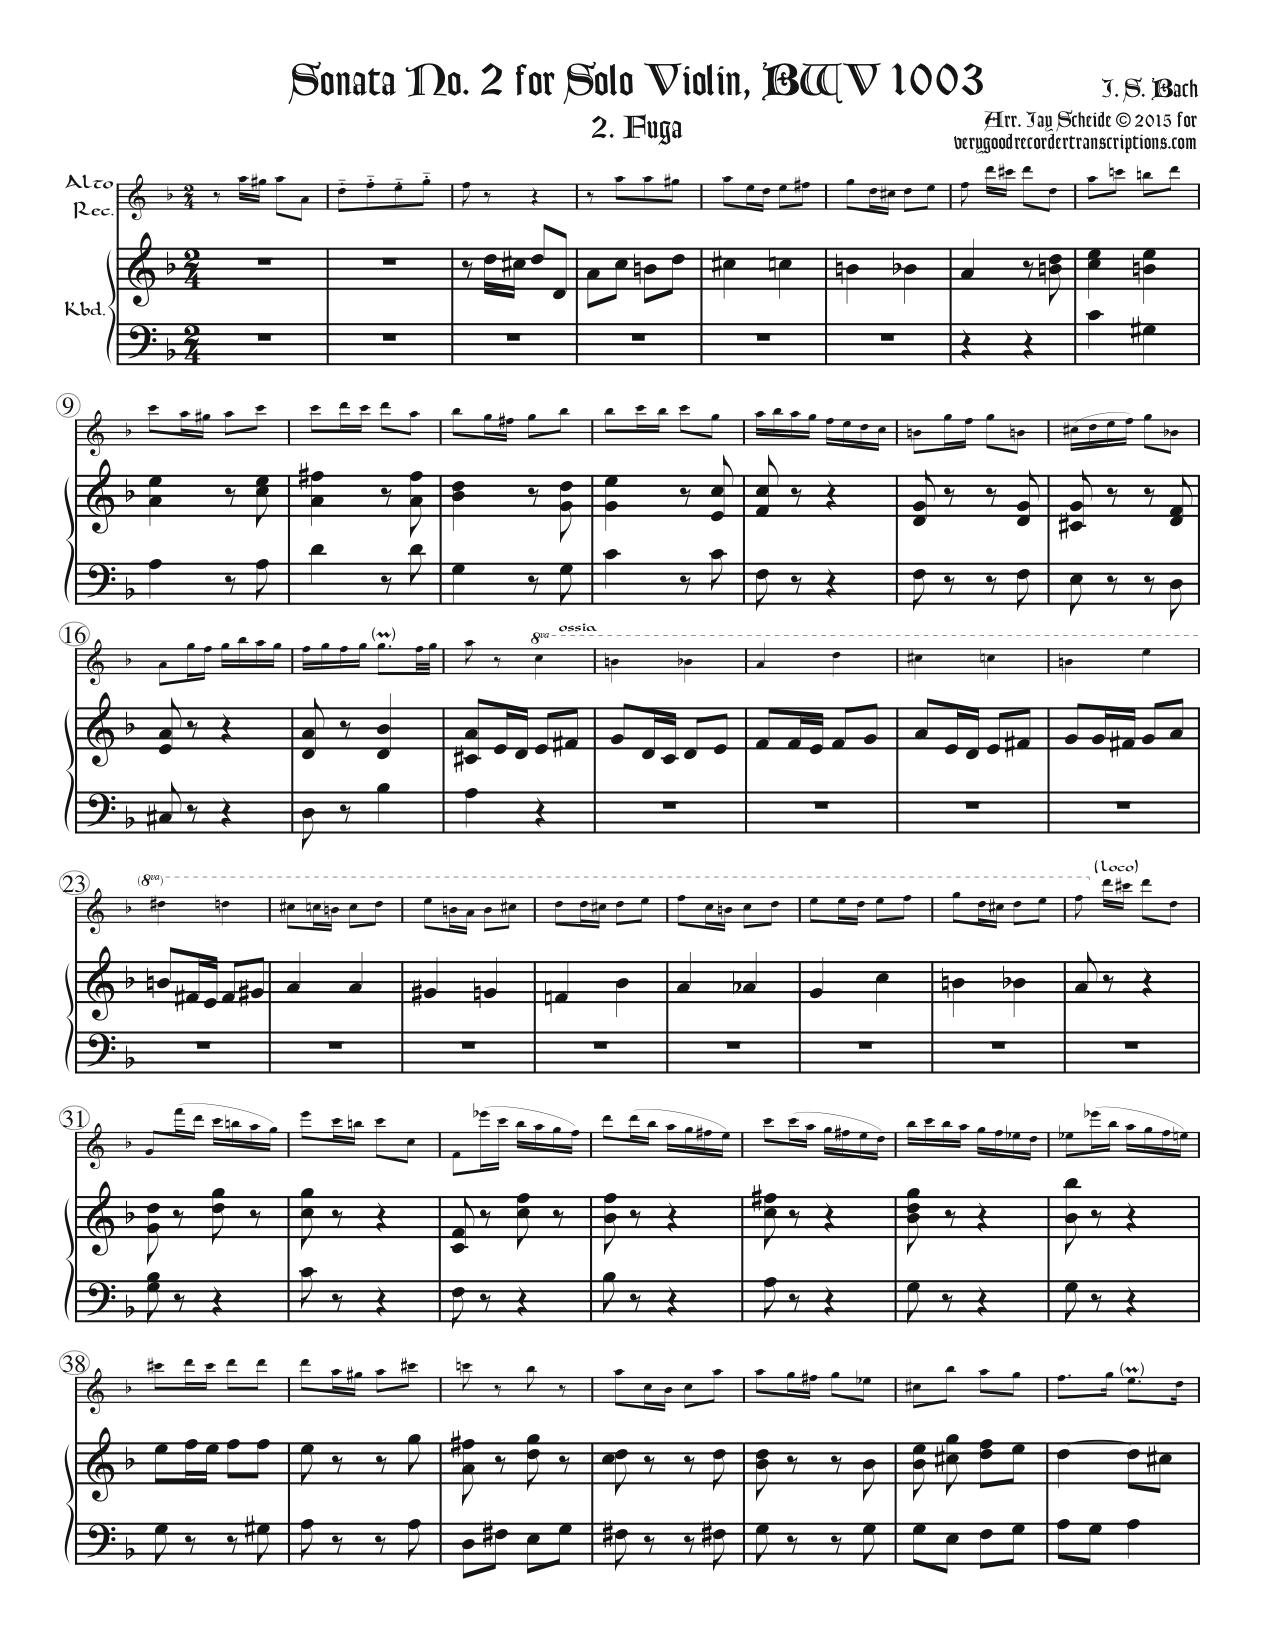 Fugue from Sonata No. 2, BWV 1003